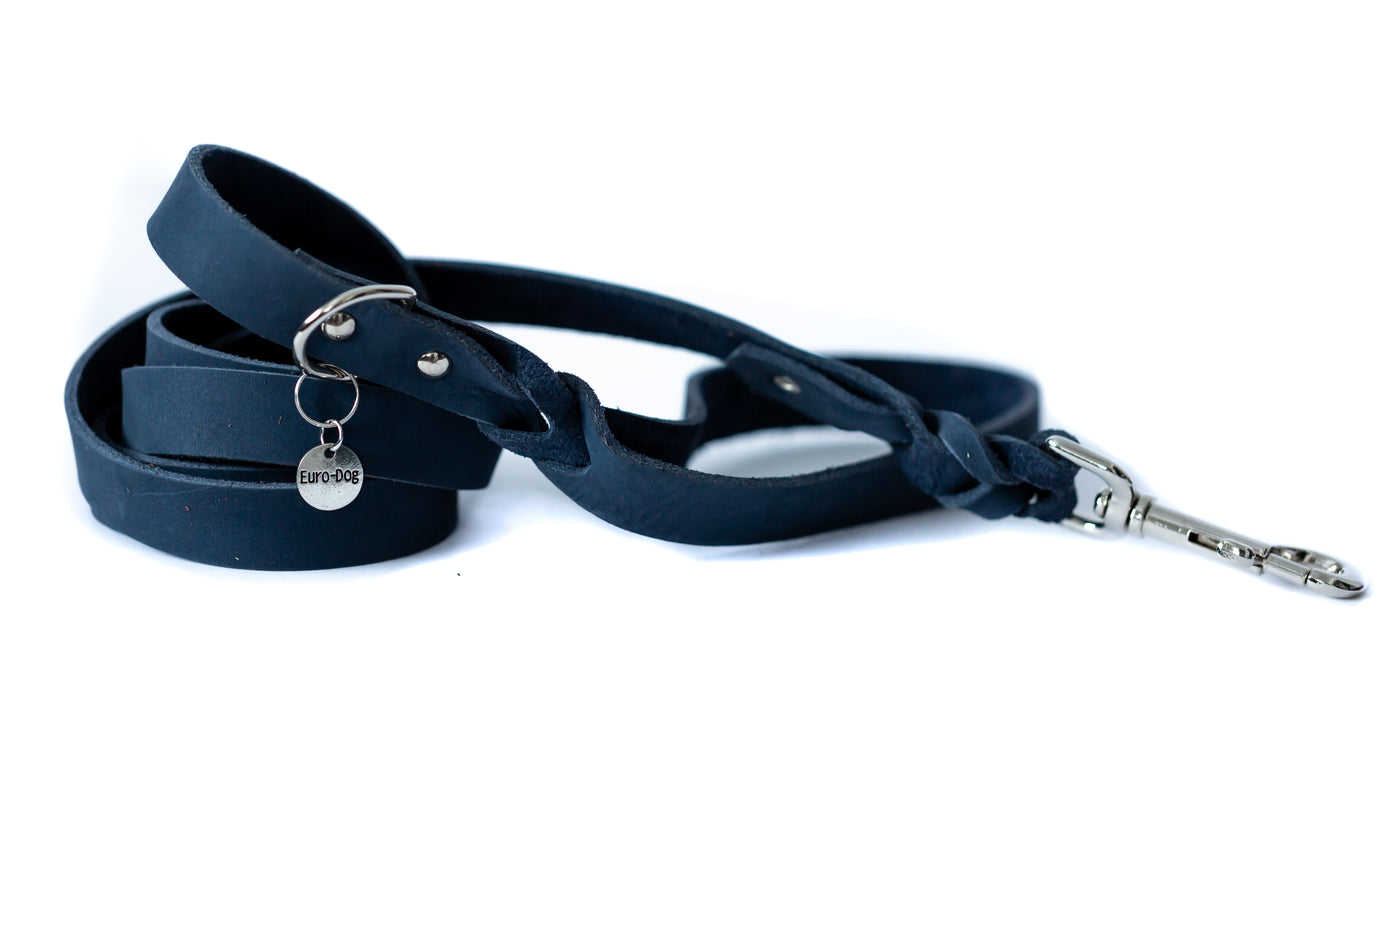 Plaited Luxury Pet Collar, Black